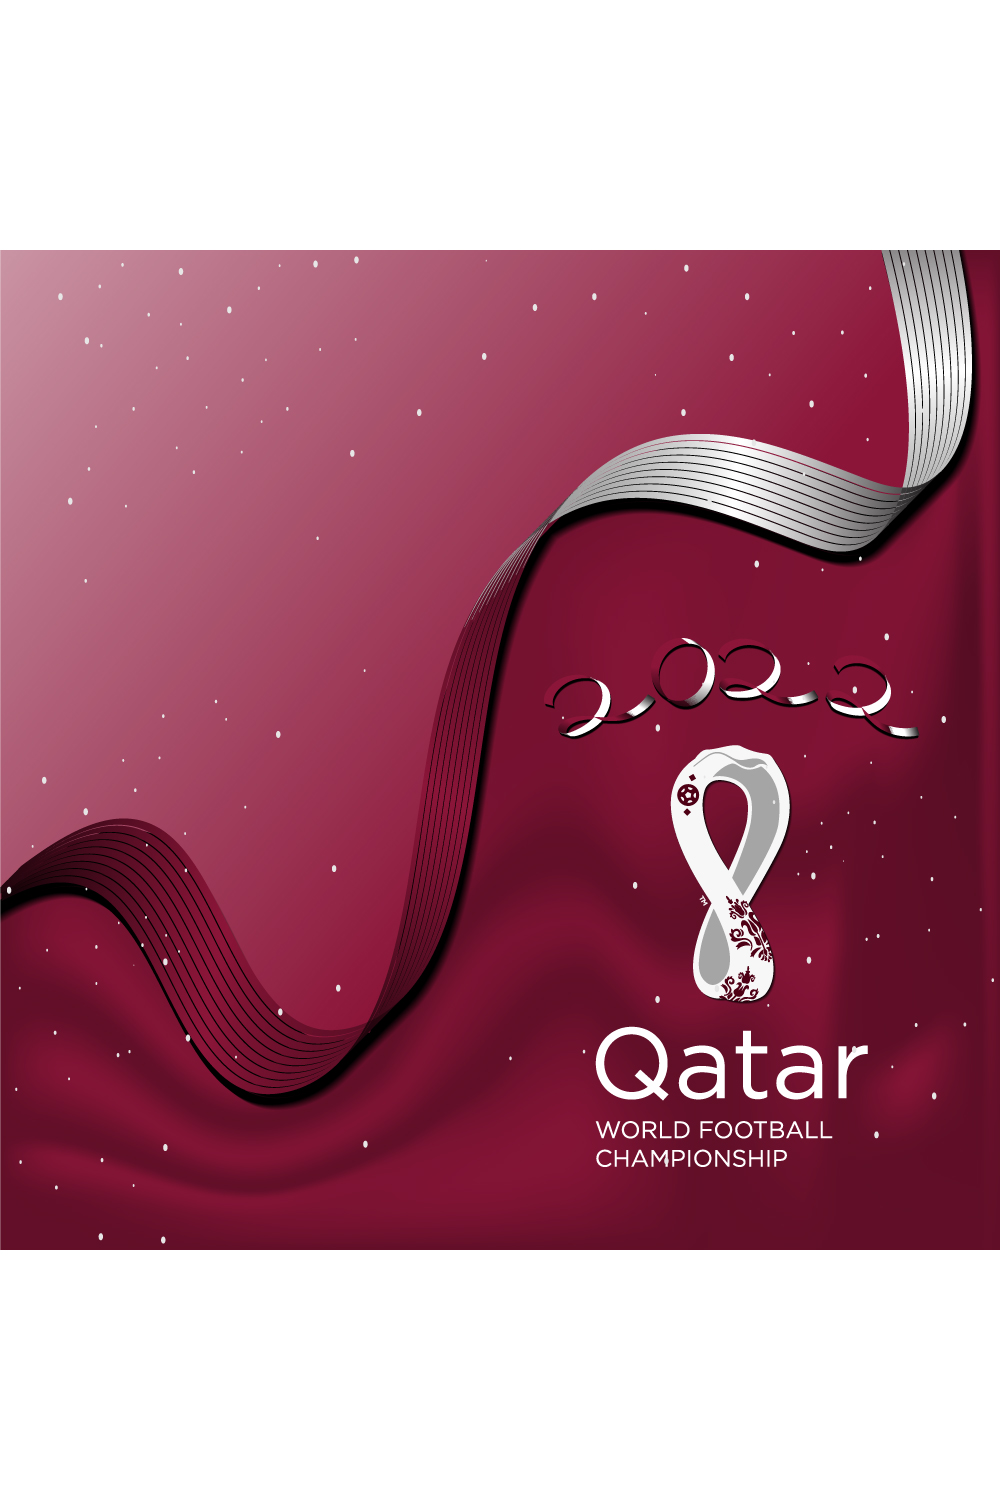 Colorful image with inscription Qatar football world championship.